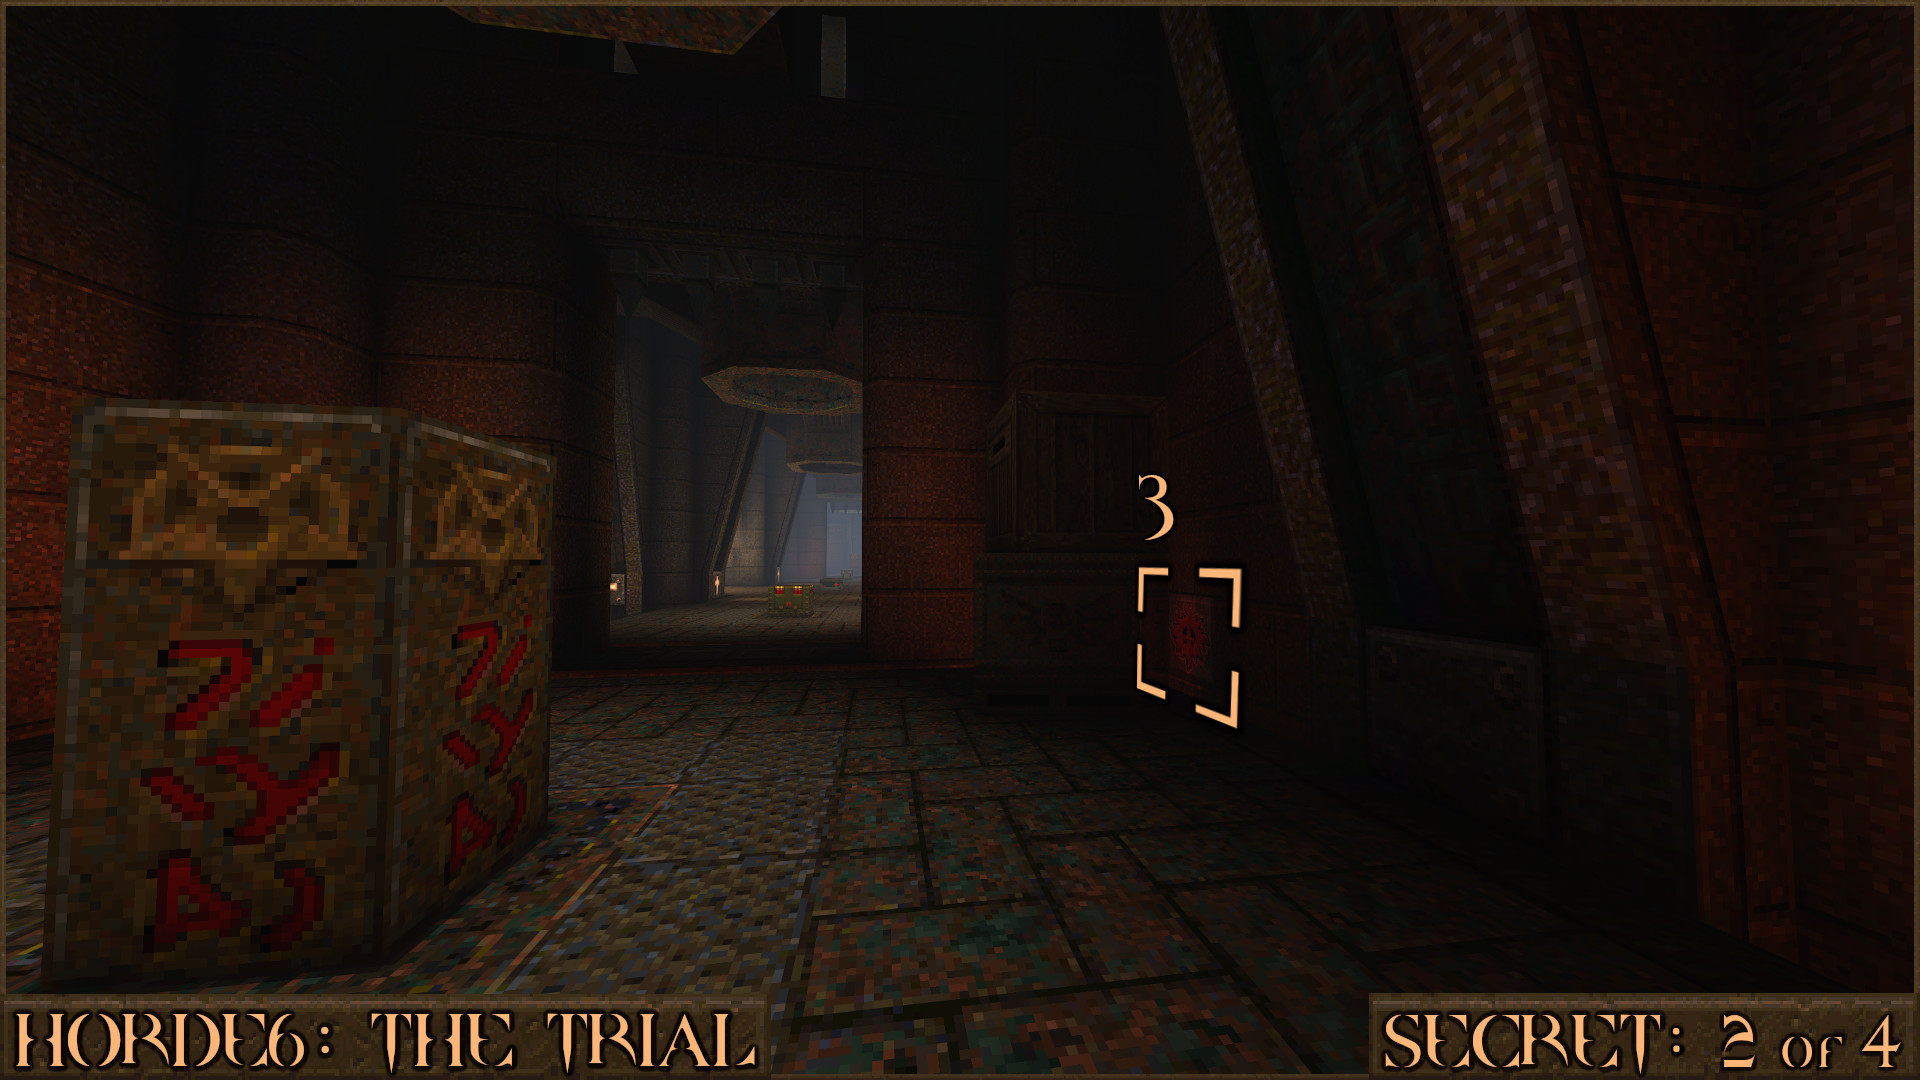 Quake - Finding all the Secrets - HORDE6: The Trial - 134E02B